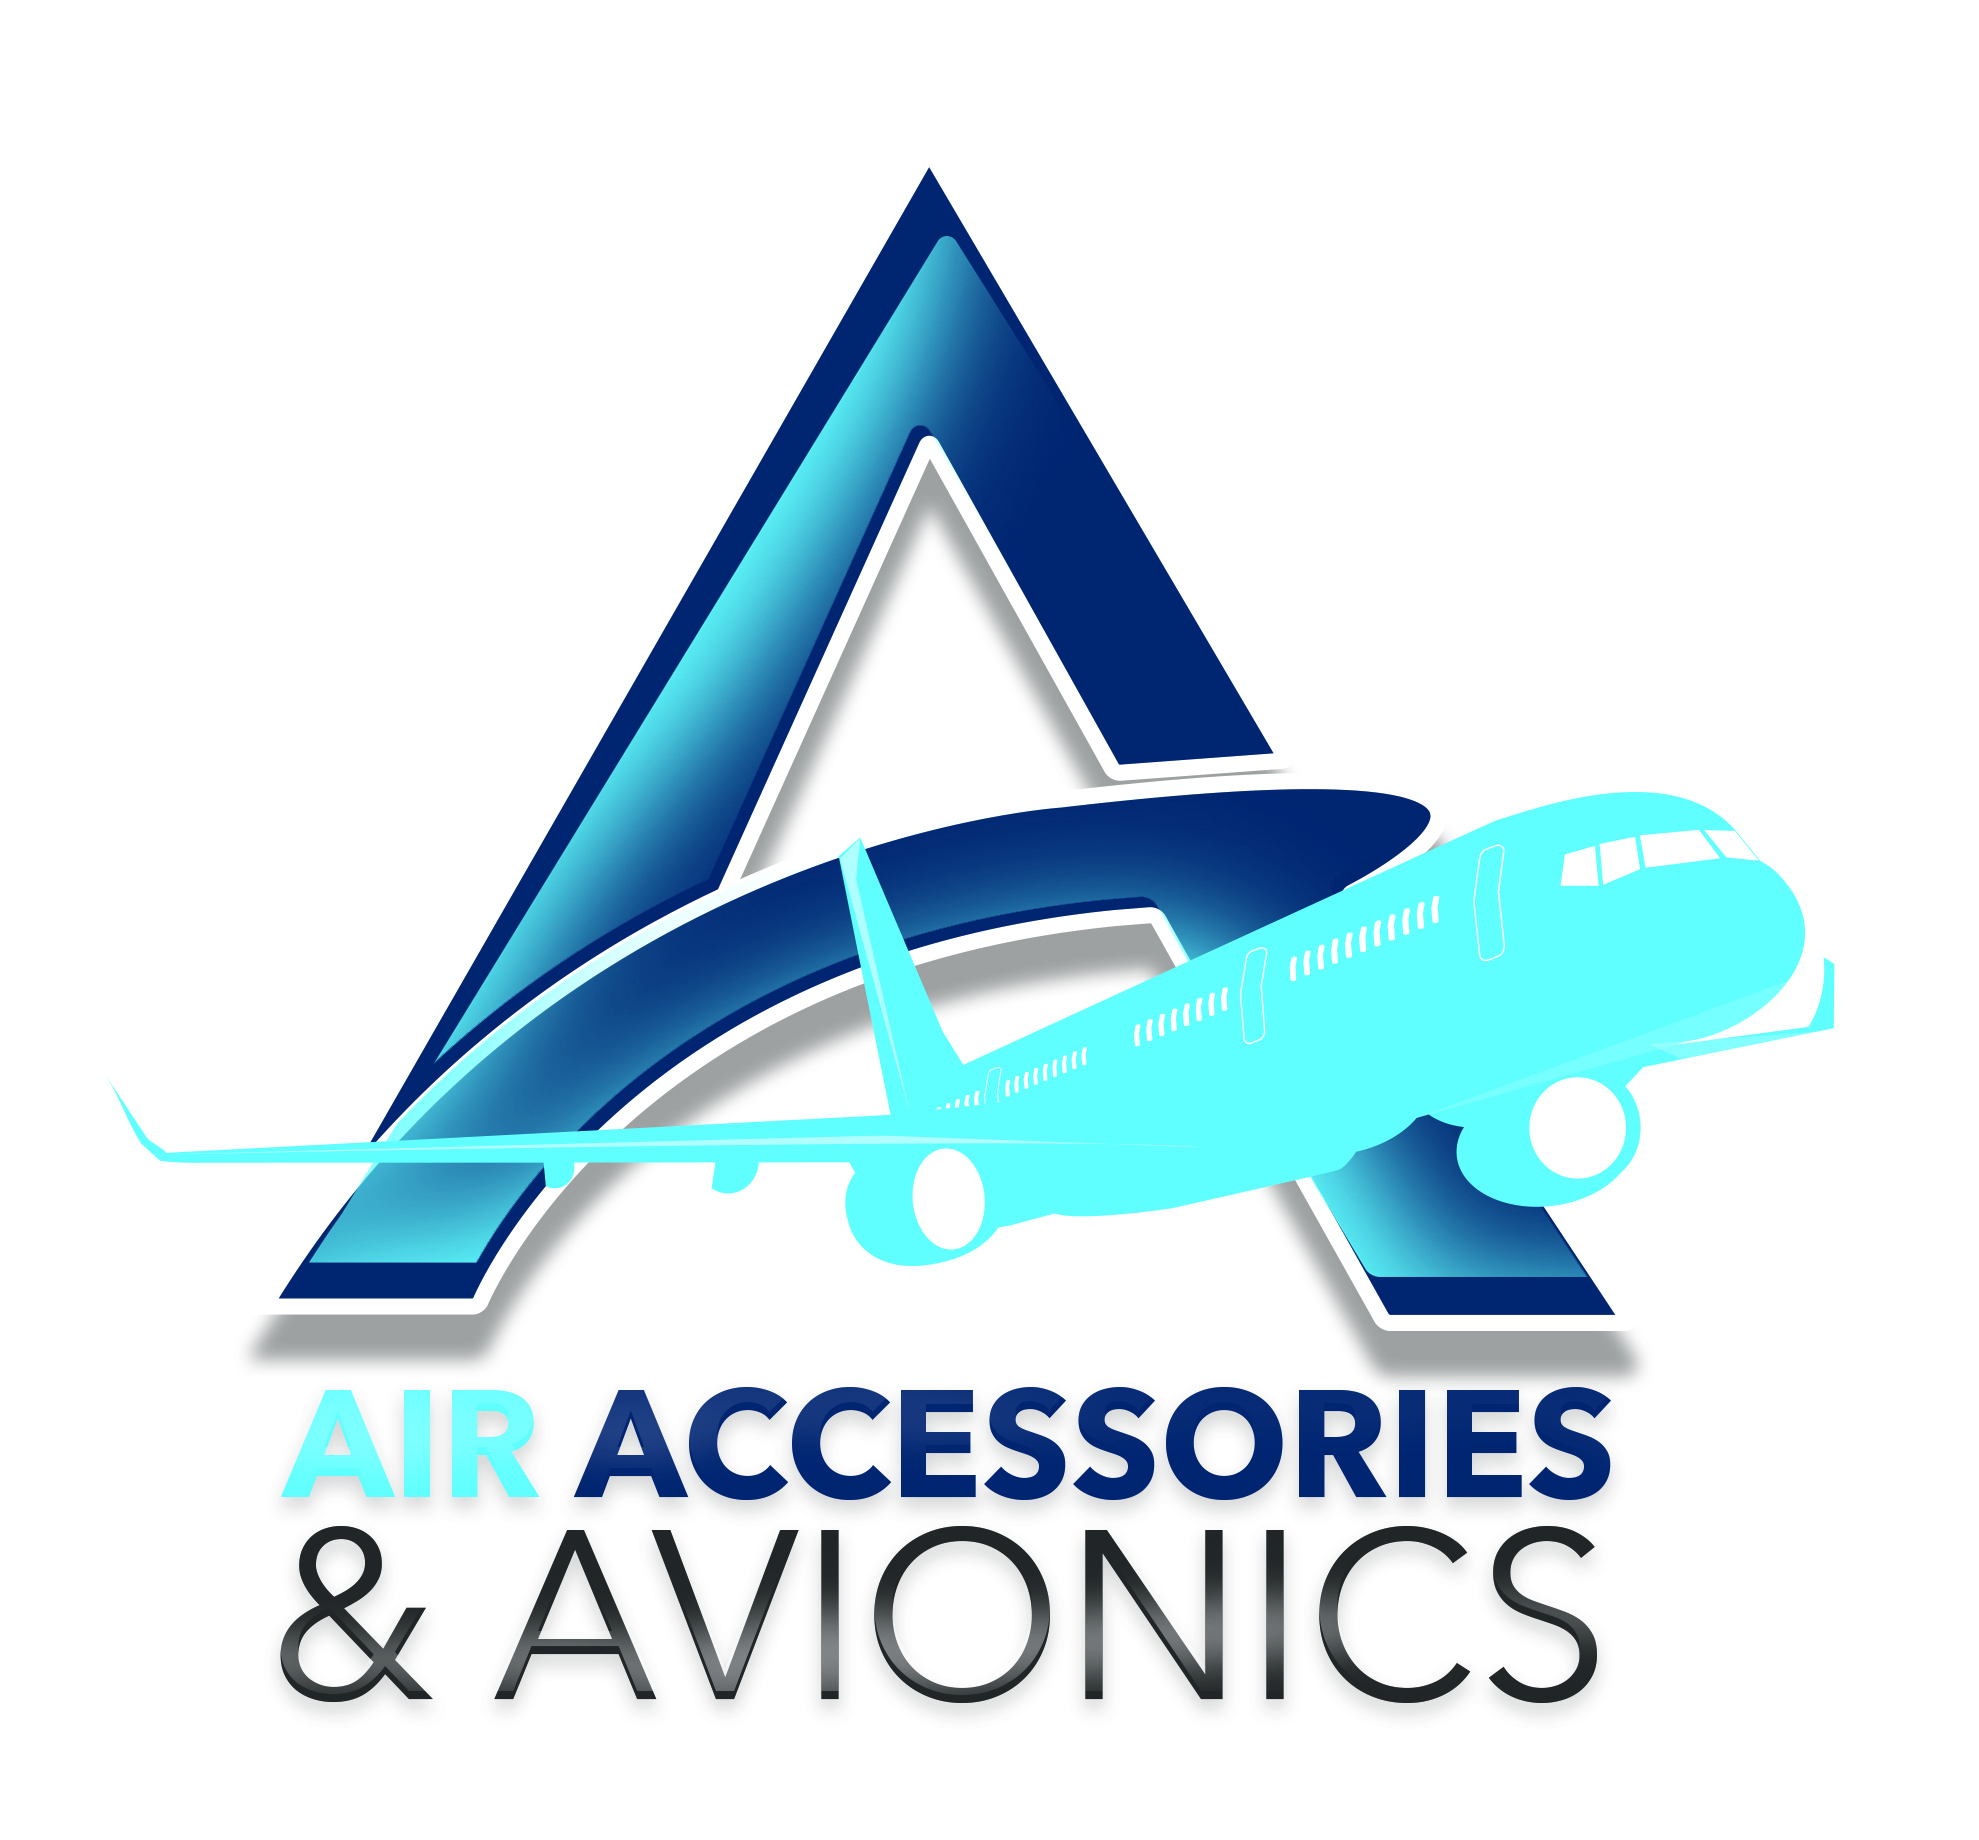 Air Accessories and Avionics